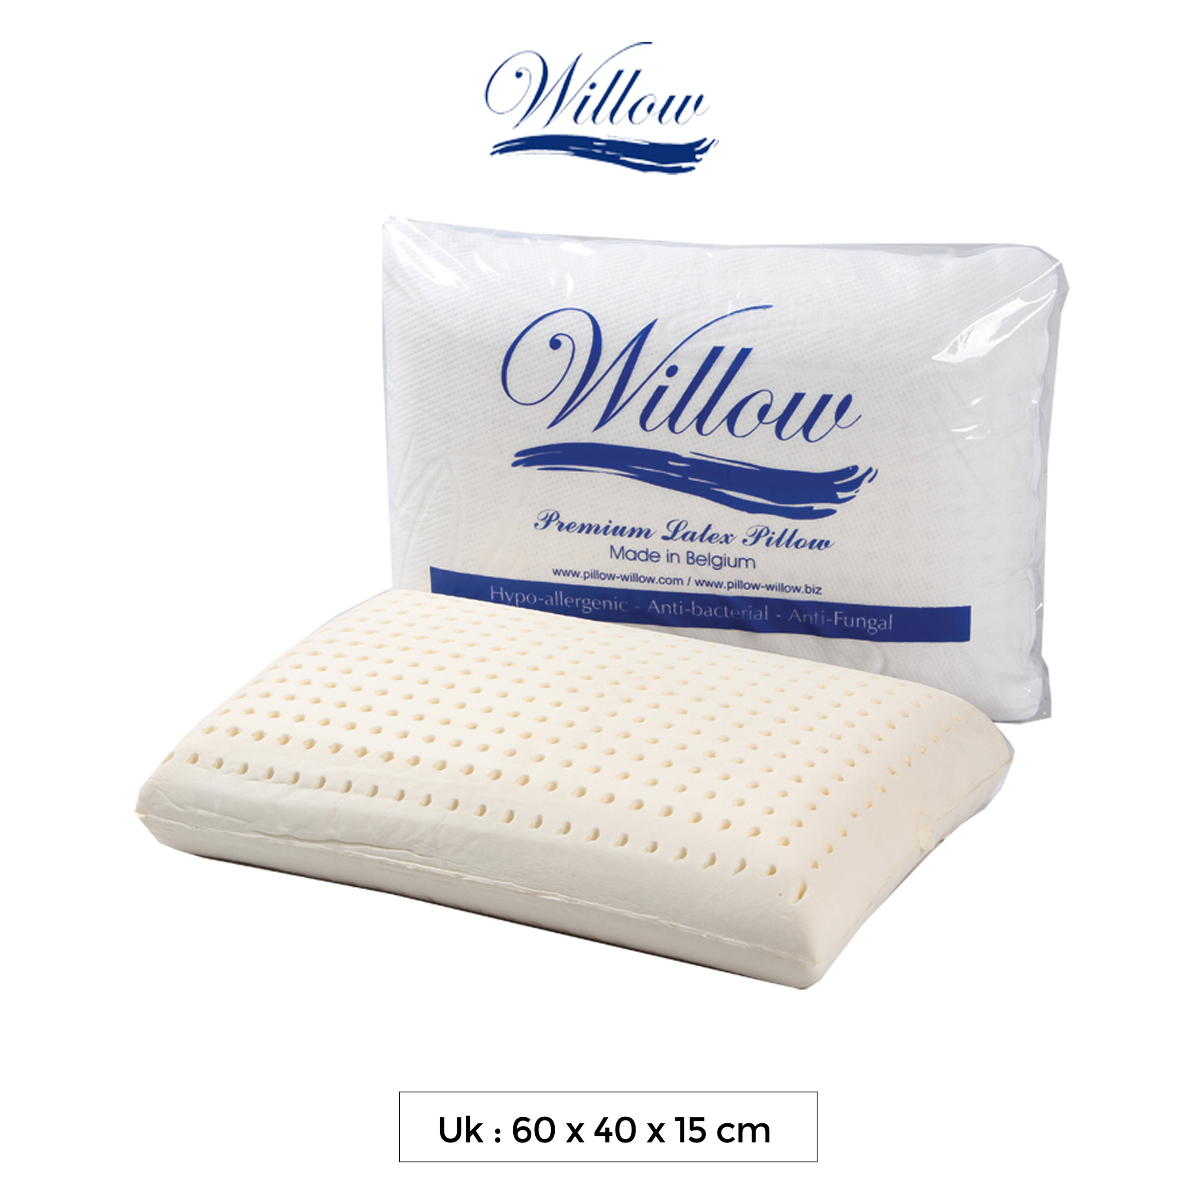 Willow Pillow Standard Latex 15cm